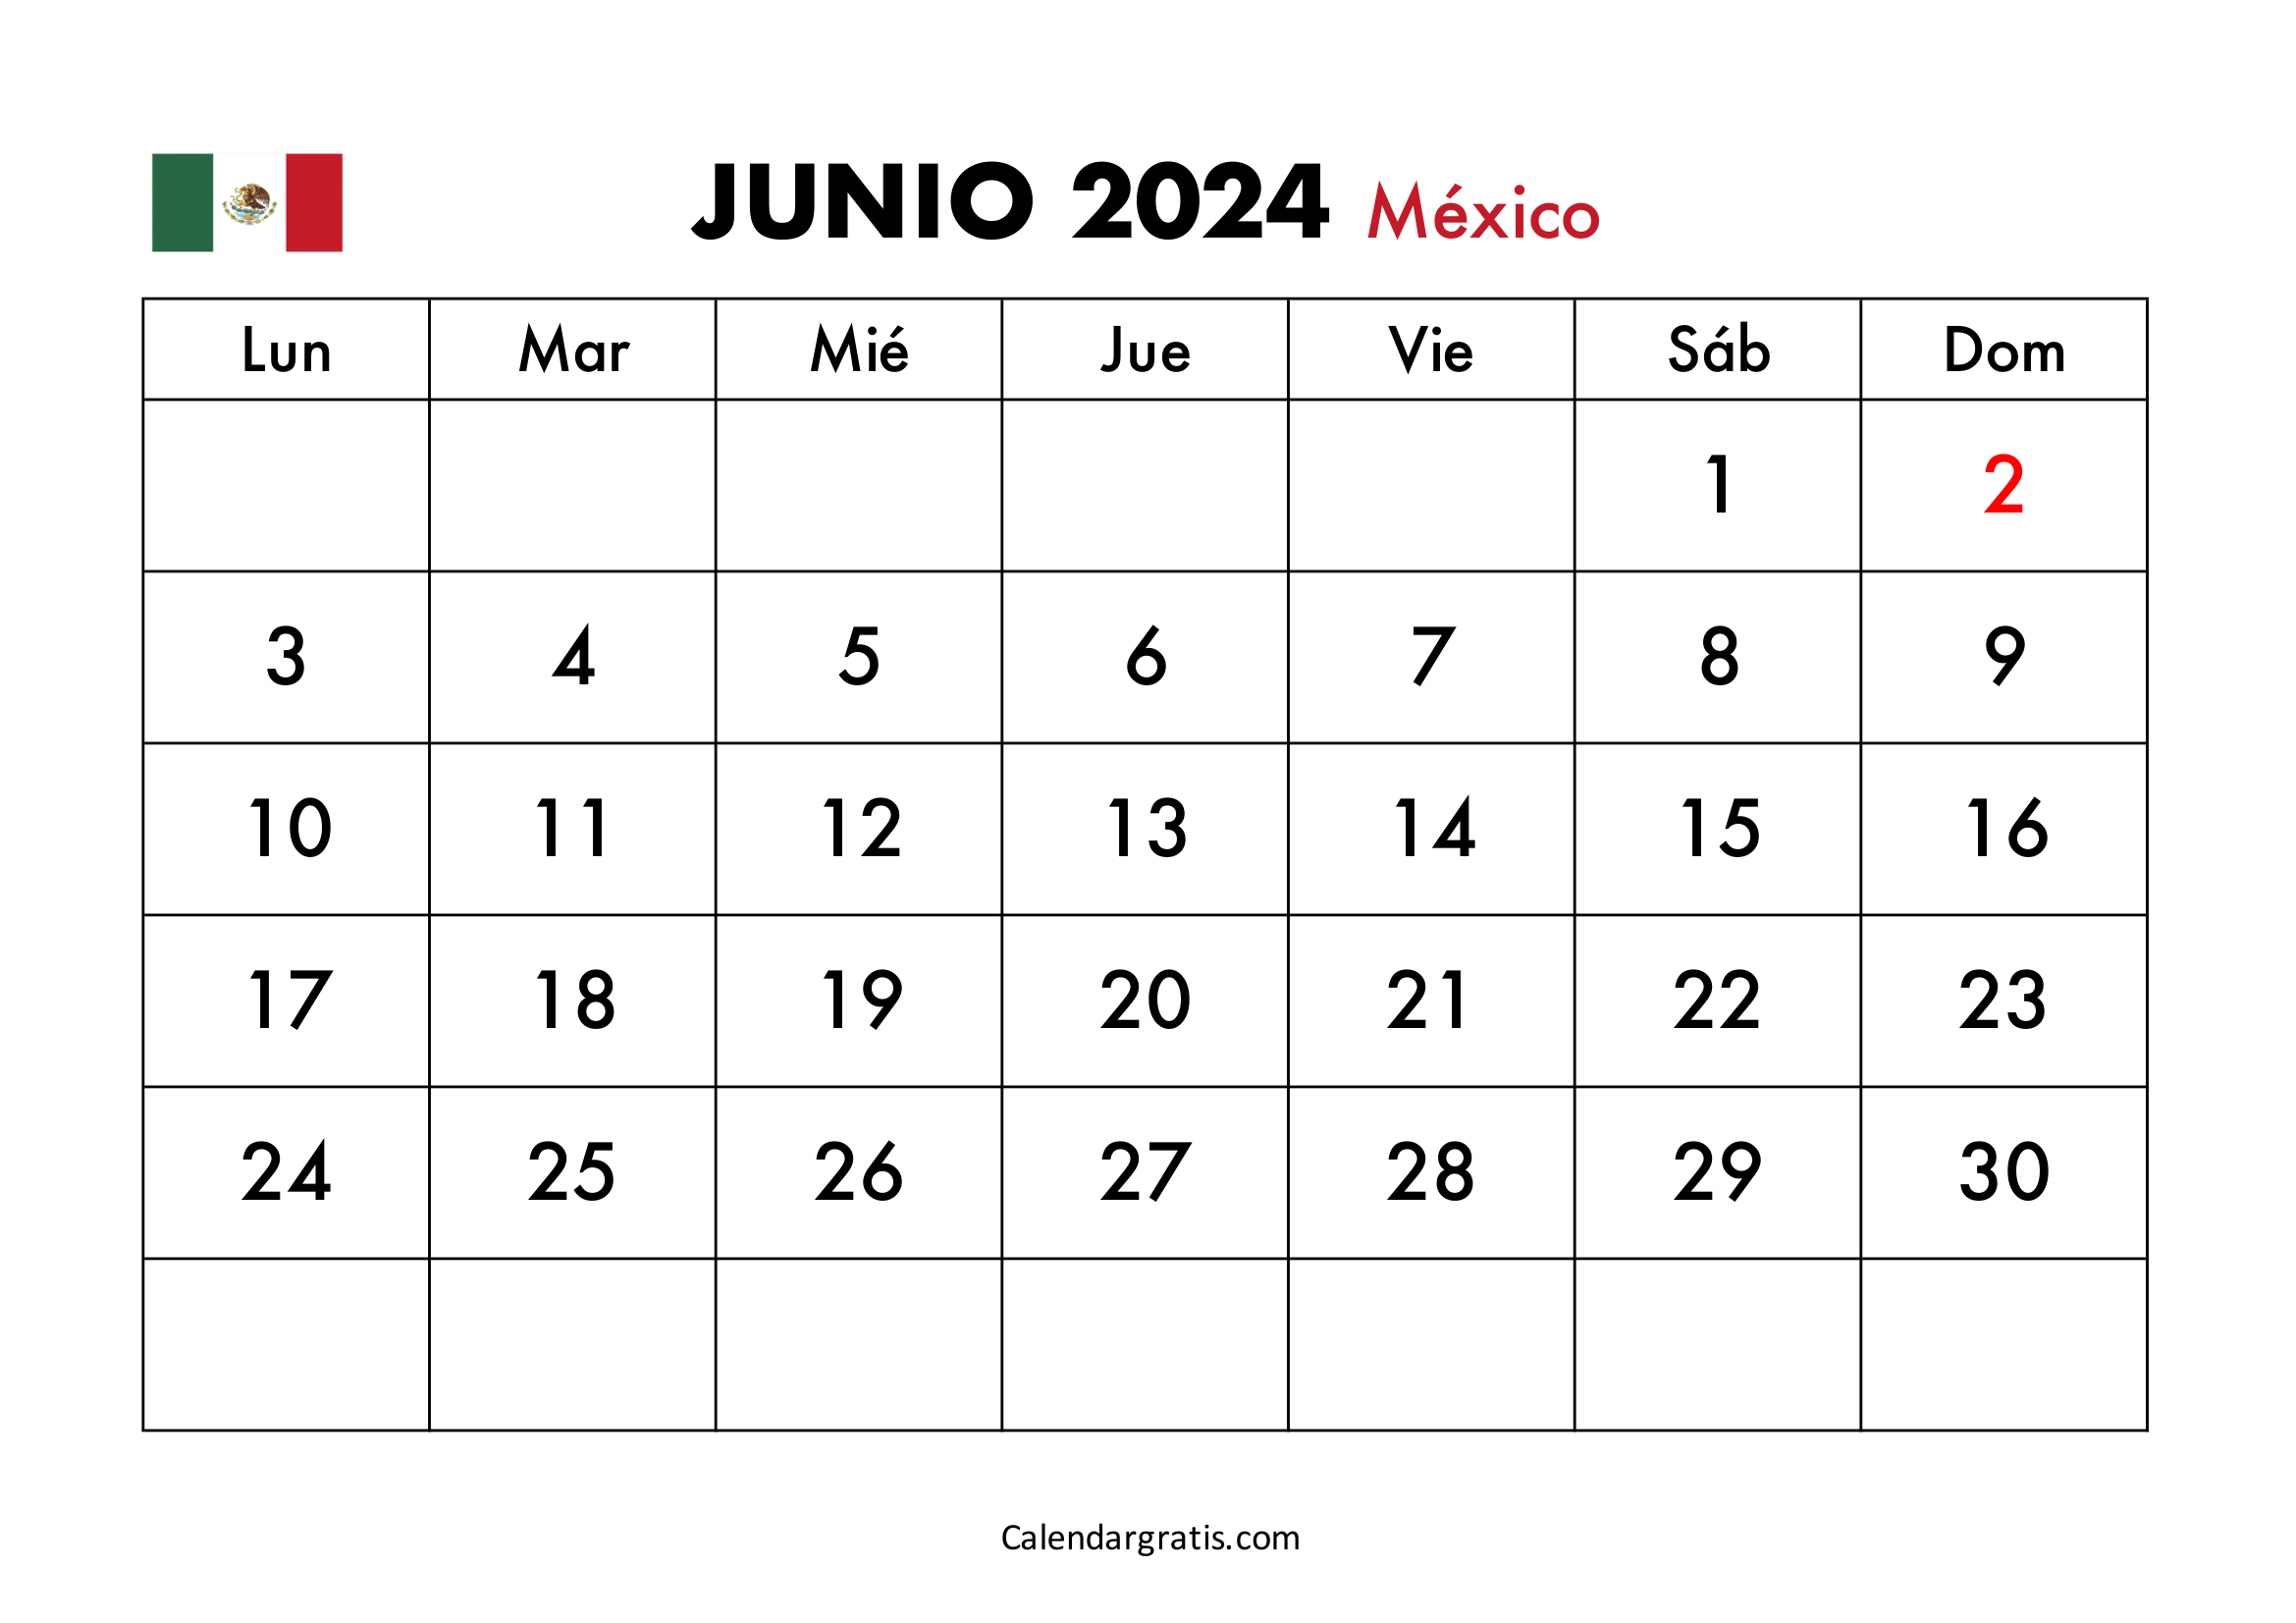 Calendario junio 2024 México